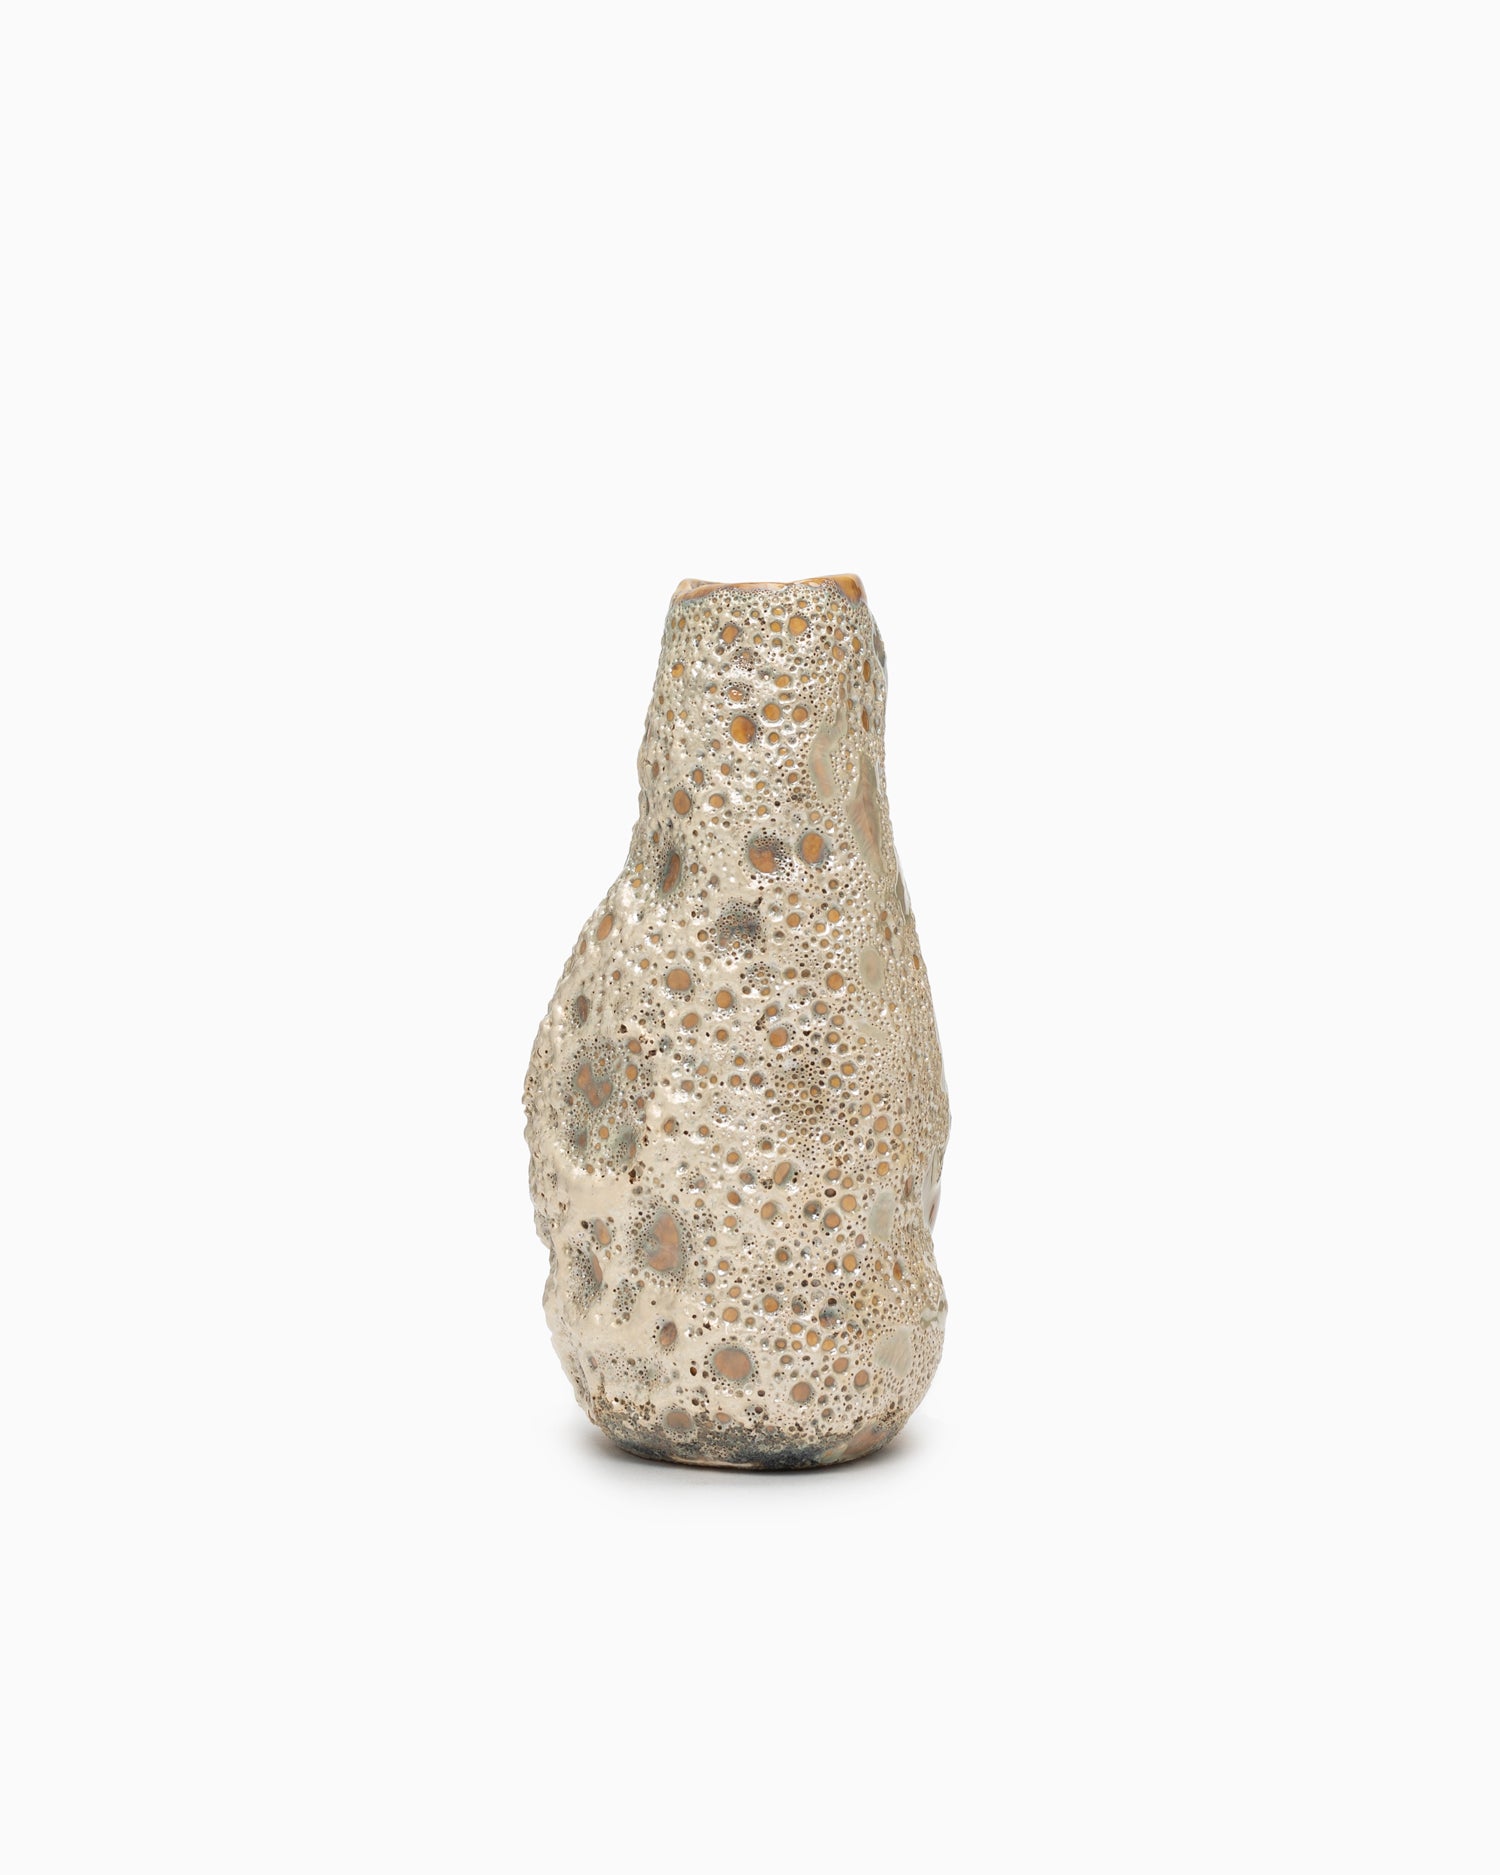 Vulca Vase Mini - Metallic Coral